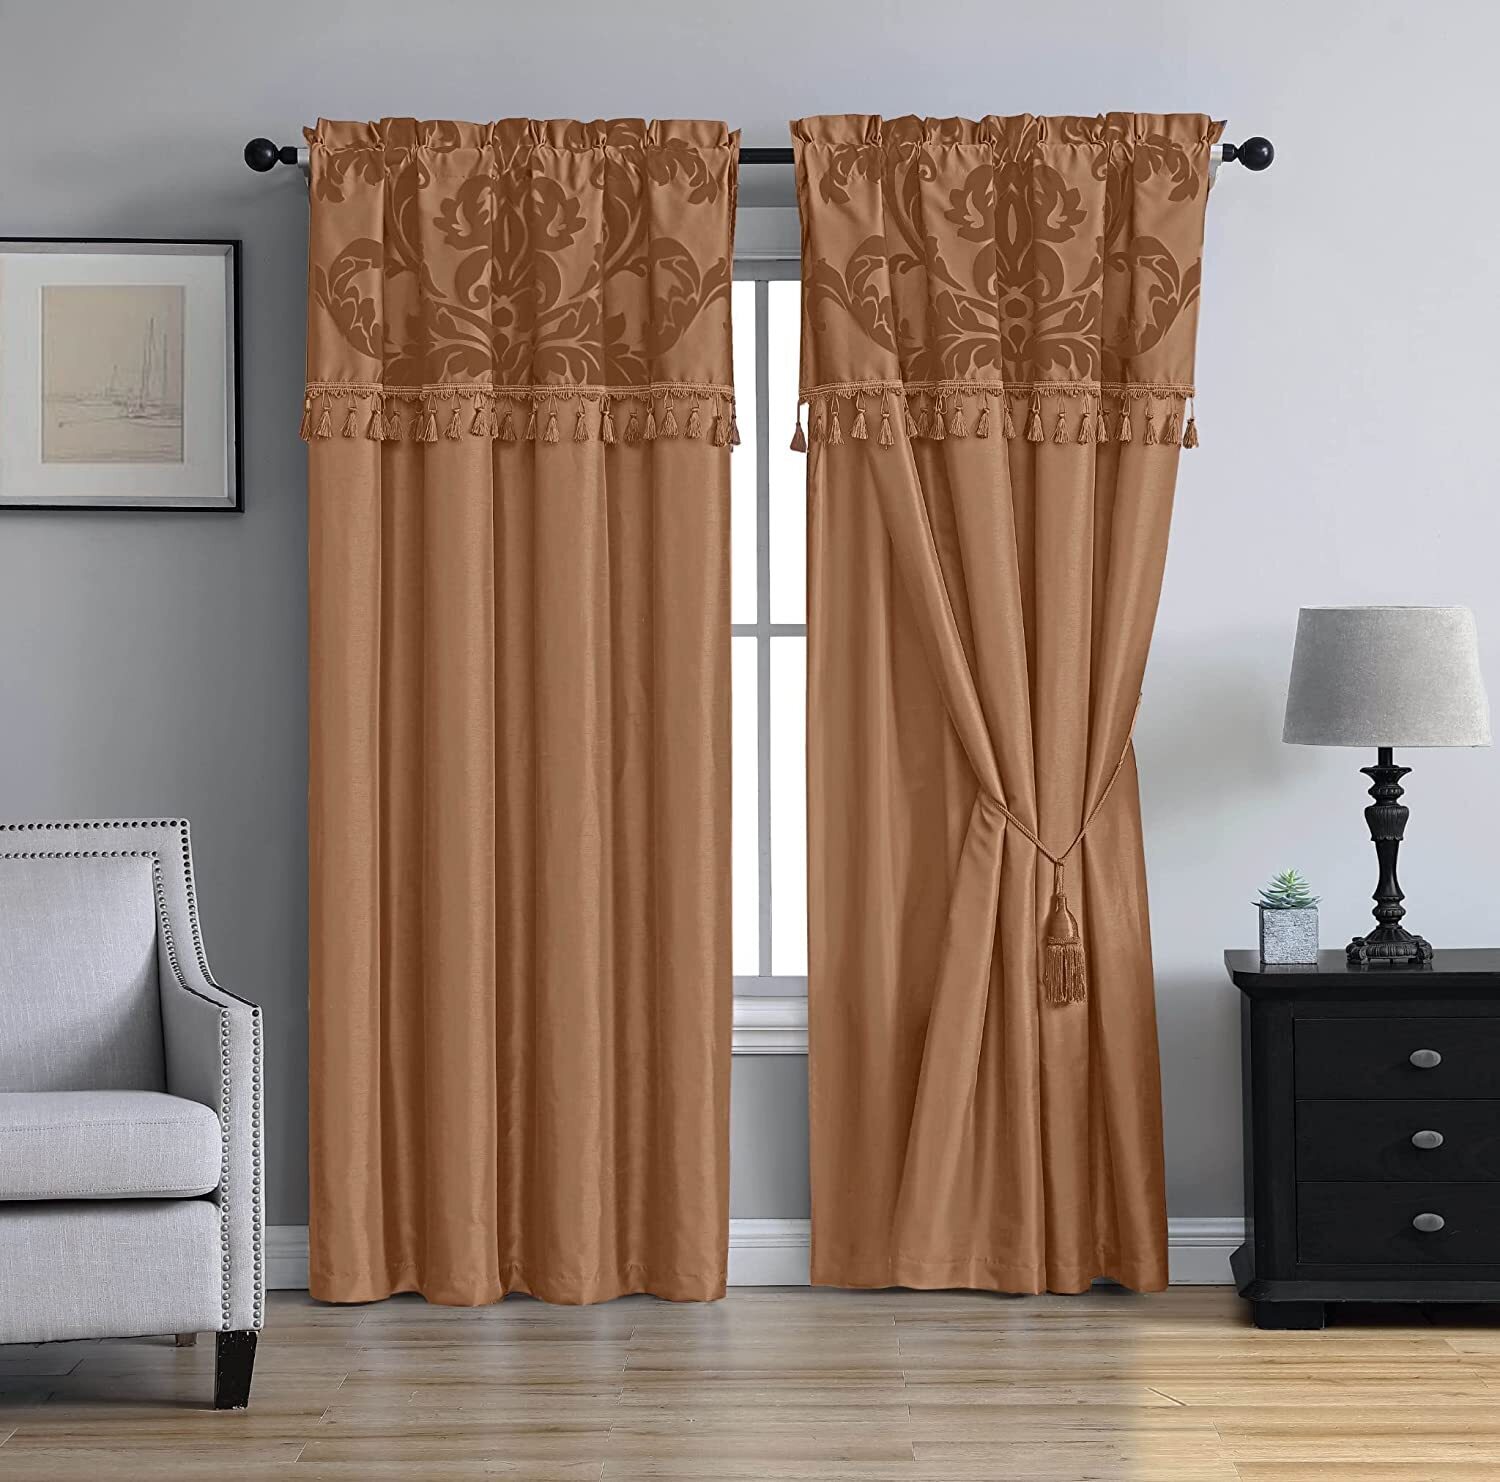 Posh Curtains With Valance